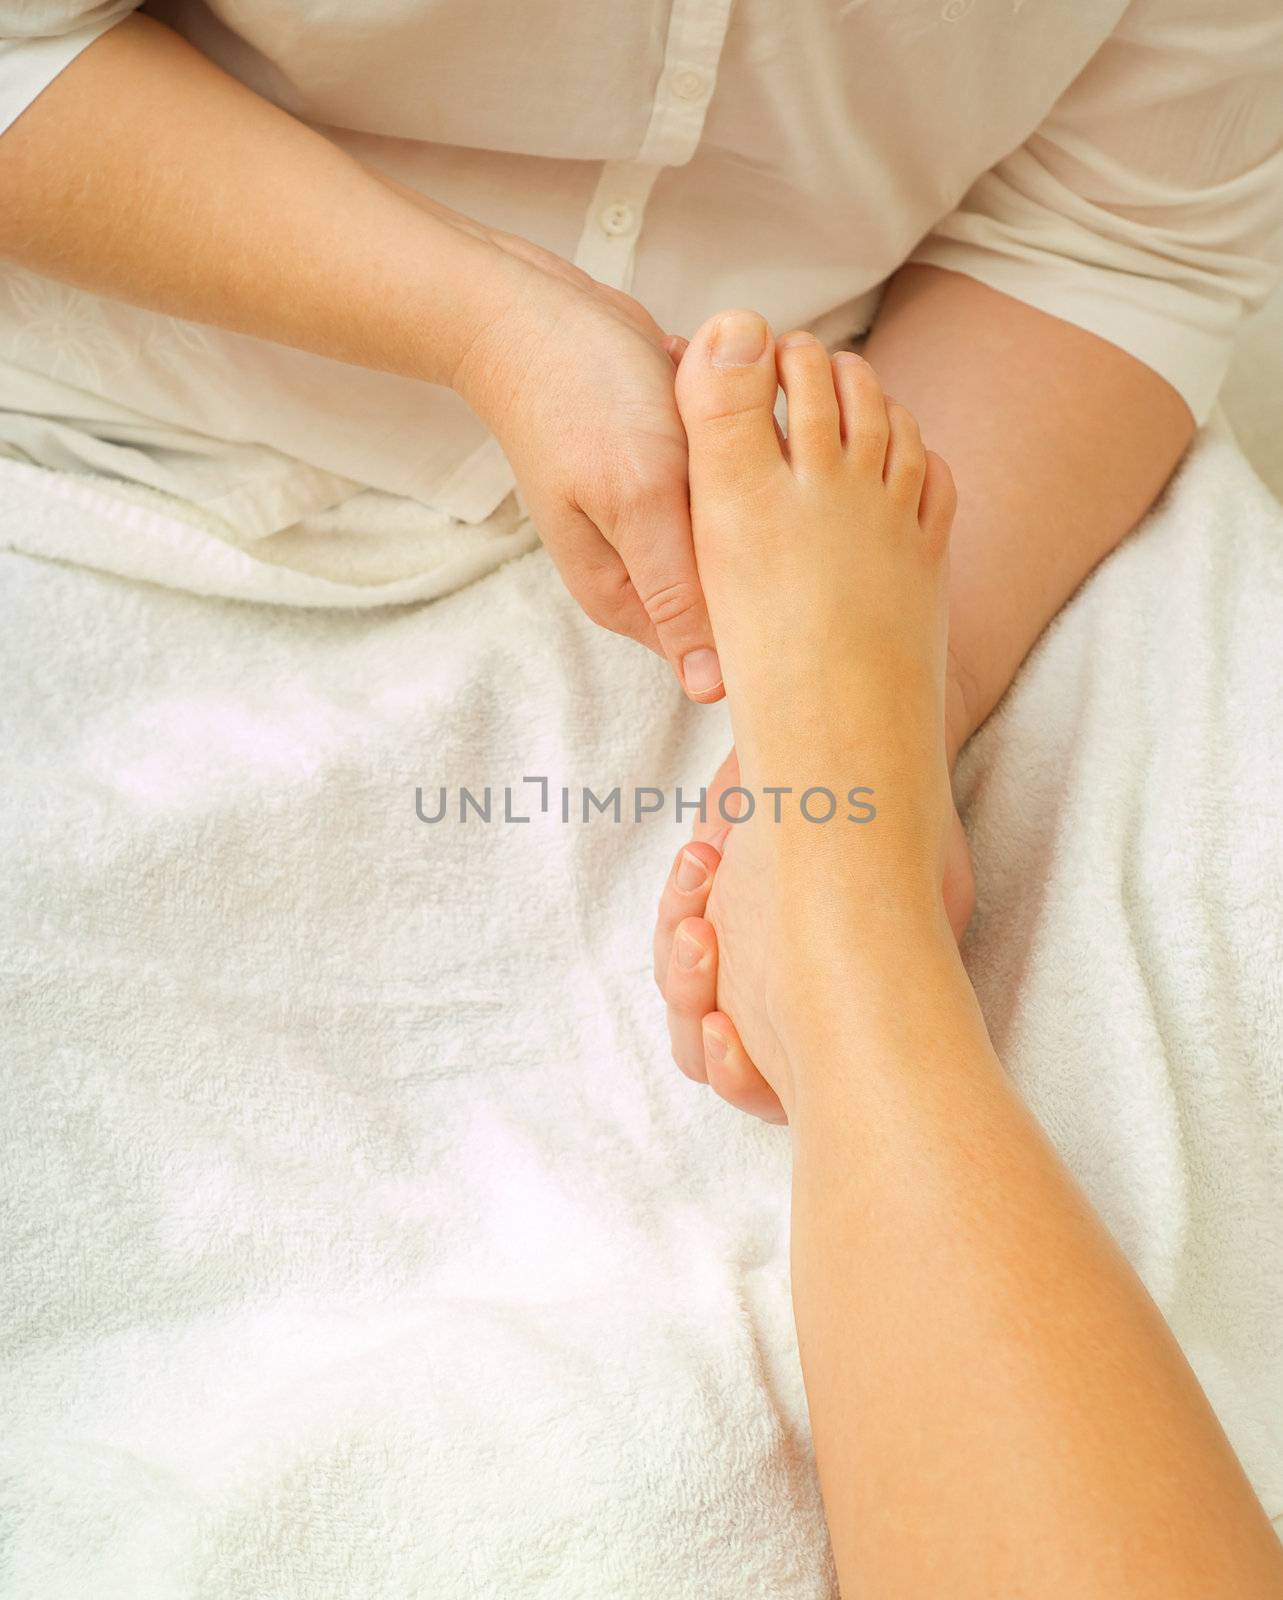 Feet in spa massage bath by alistaircotton